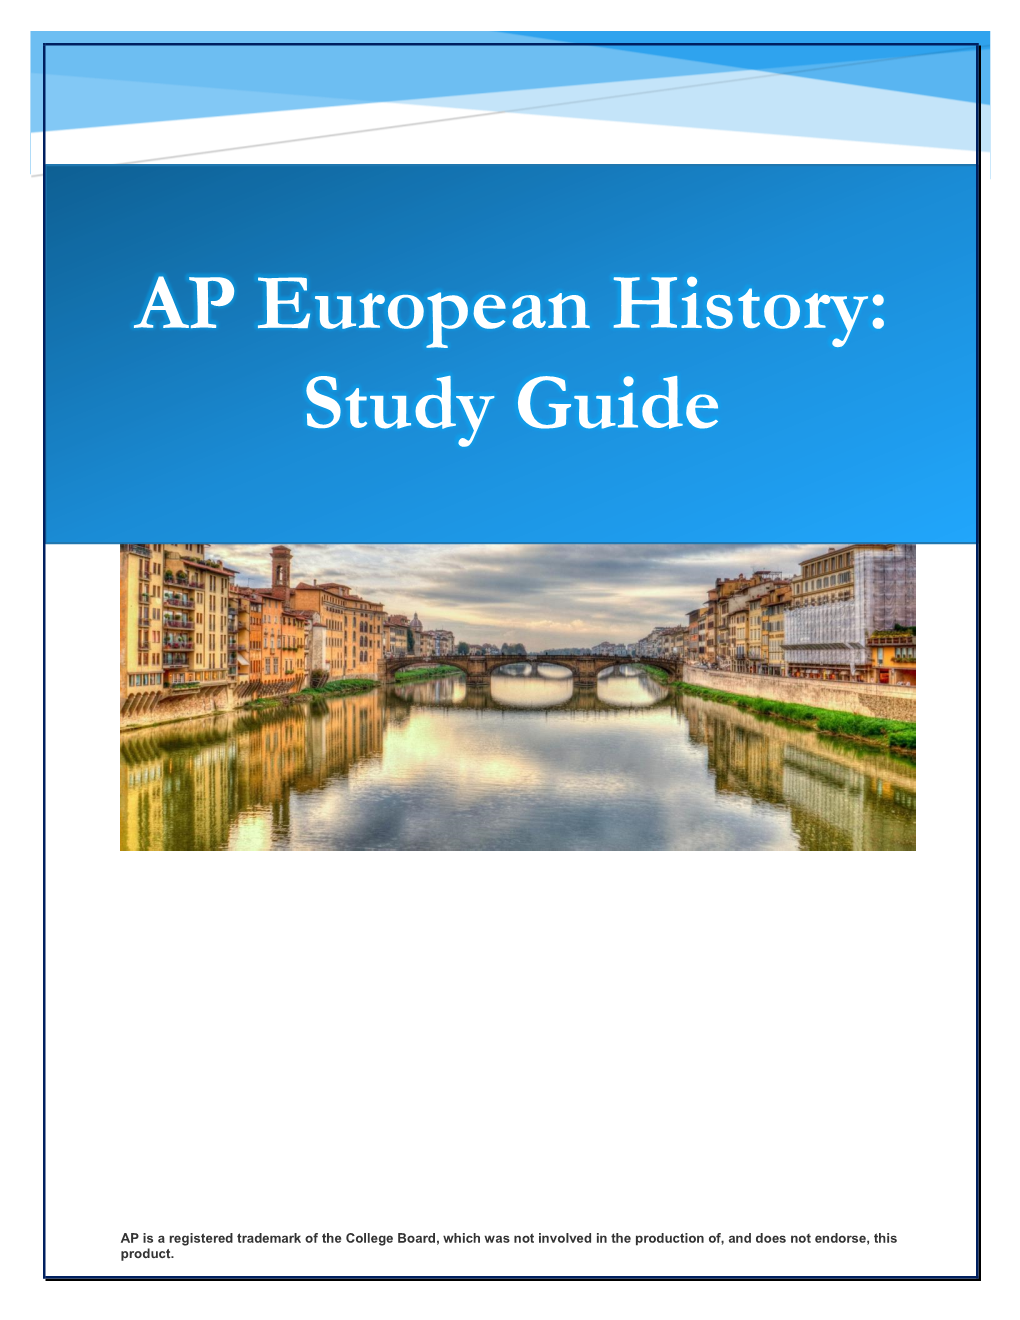 AP European History Study Guide